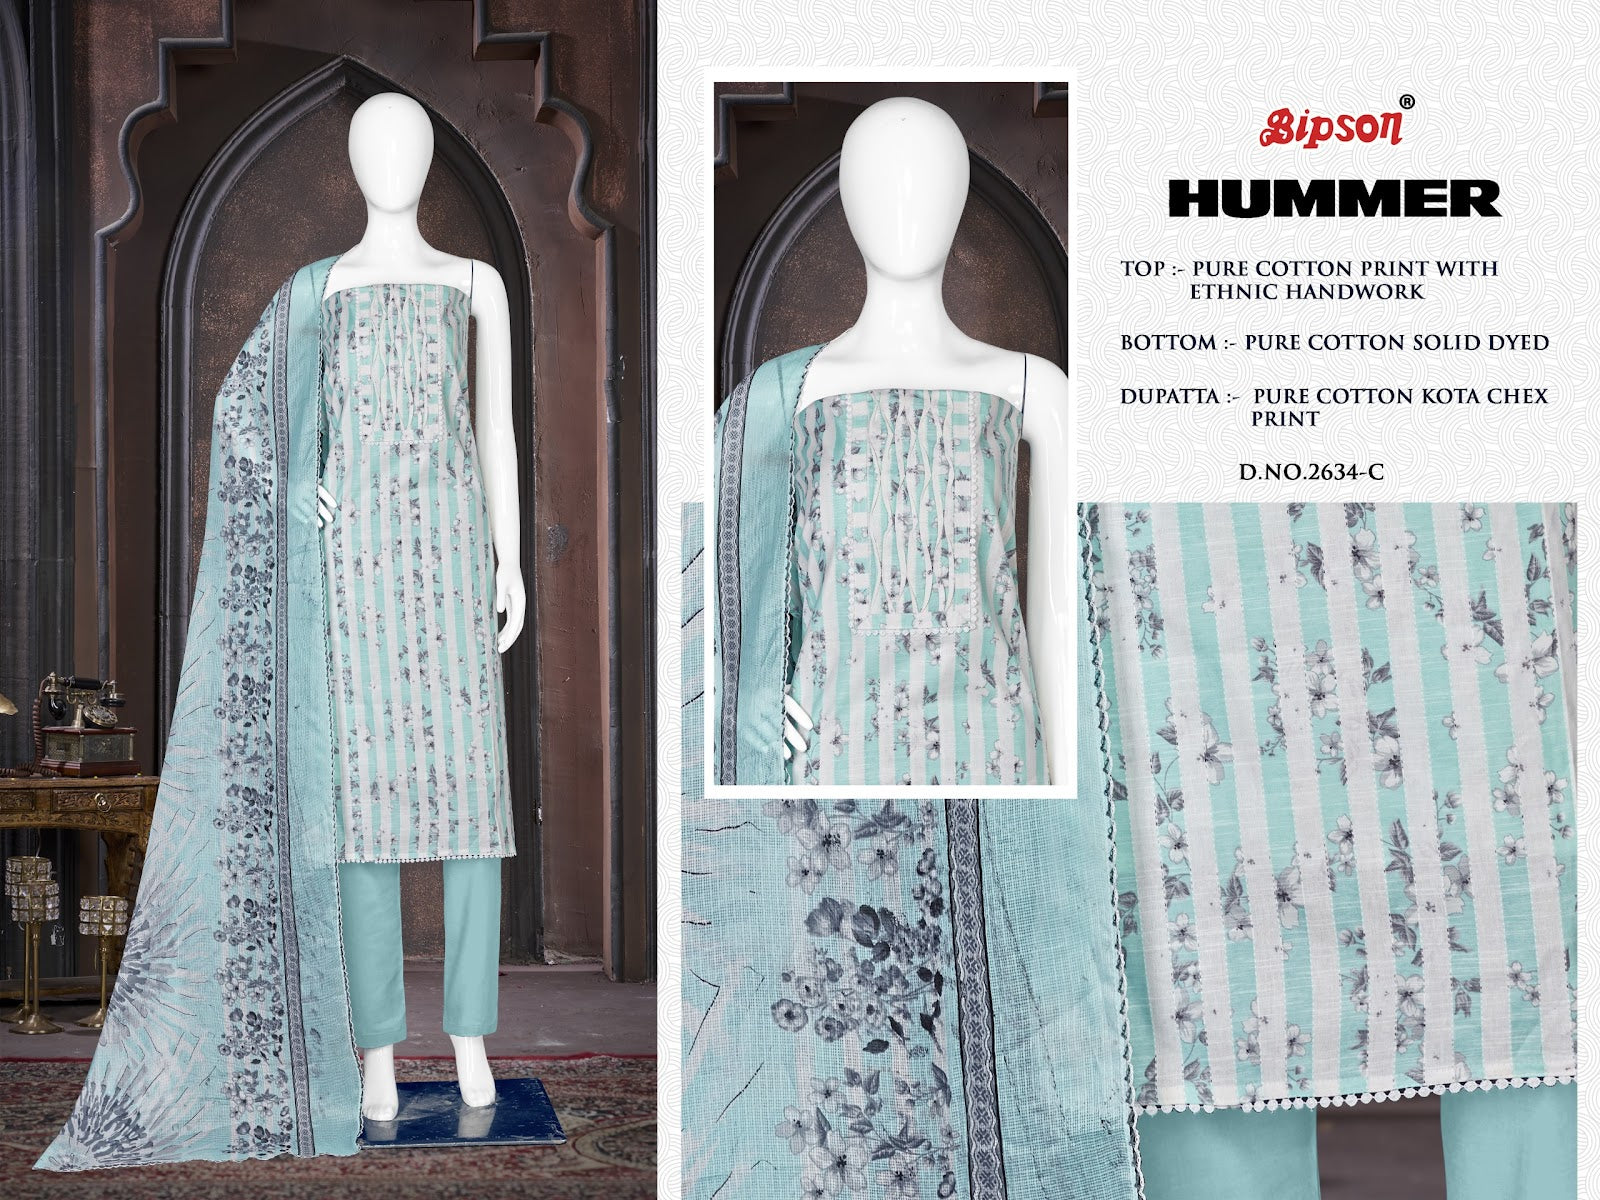 Hummer 2634 Bipson Prints Pure Cotton Pant Style Suits Wholesale Rate